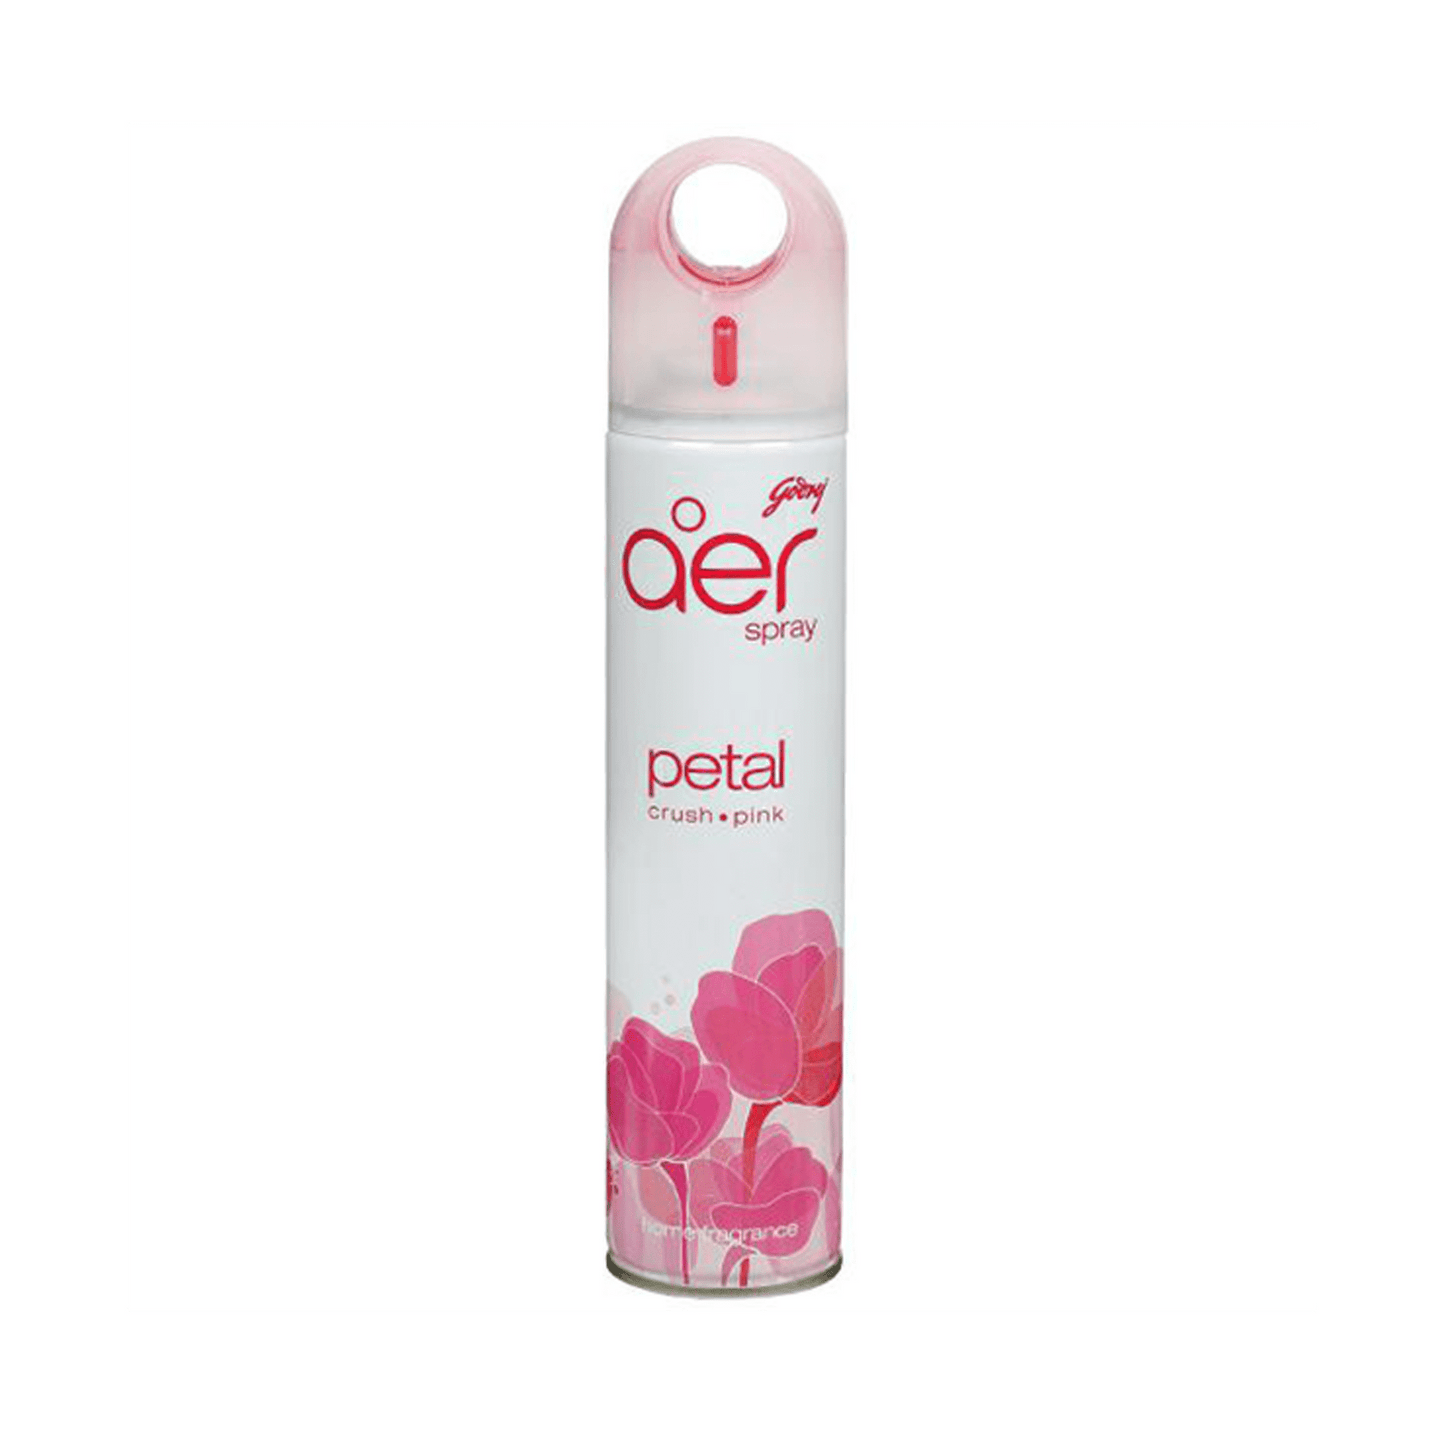 Godrej Aer Spray Petal Crush Pink.